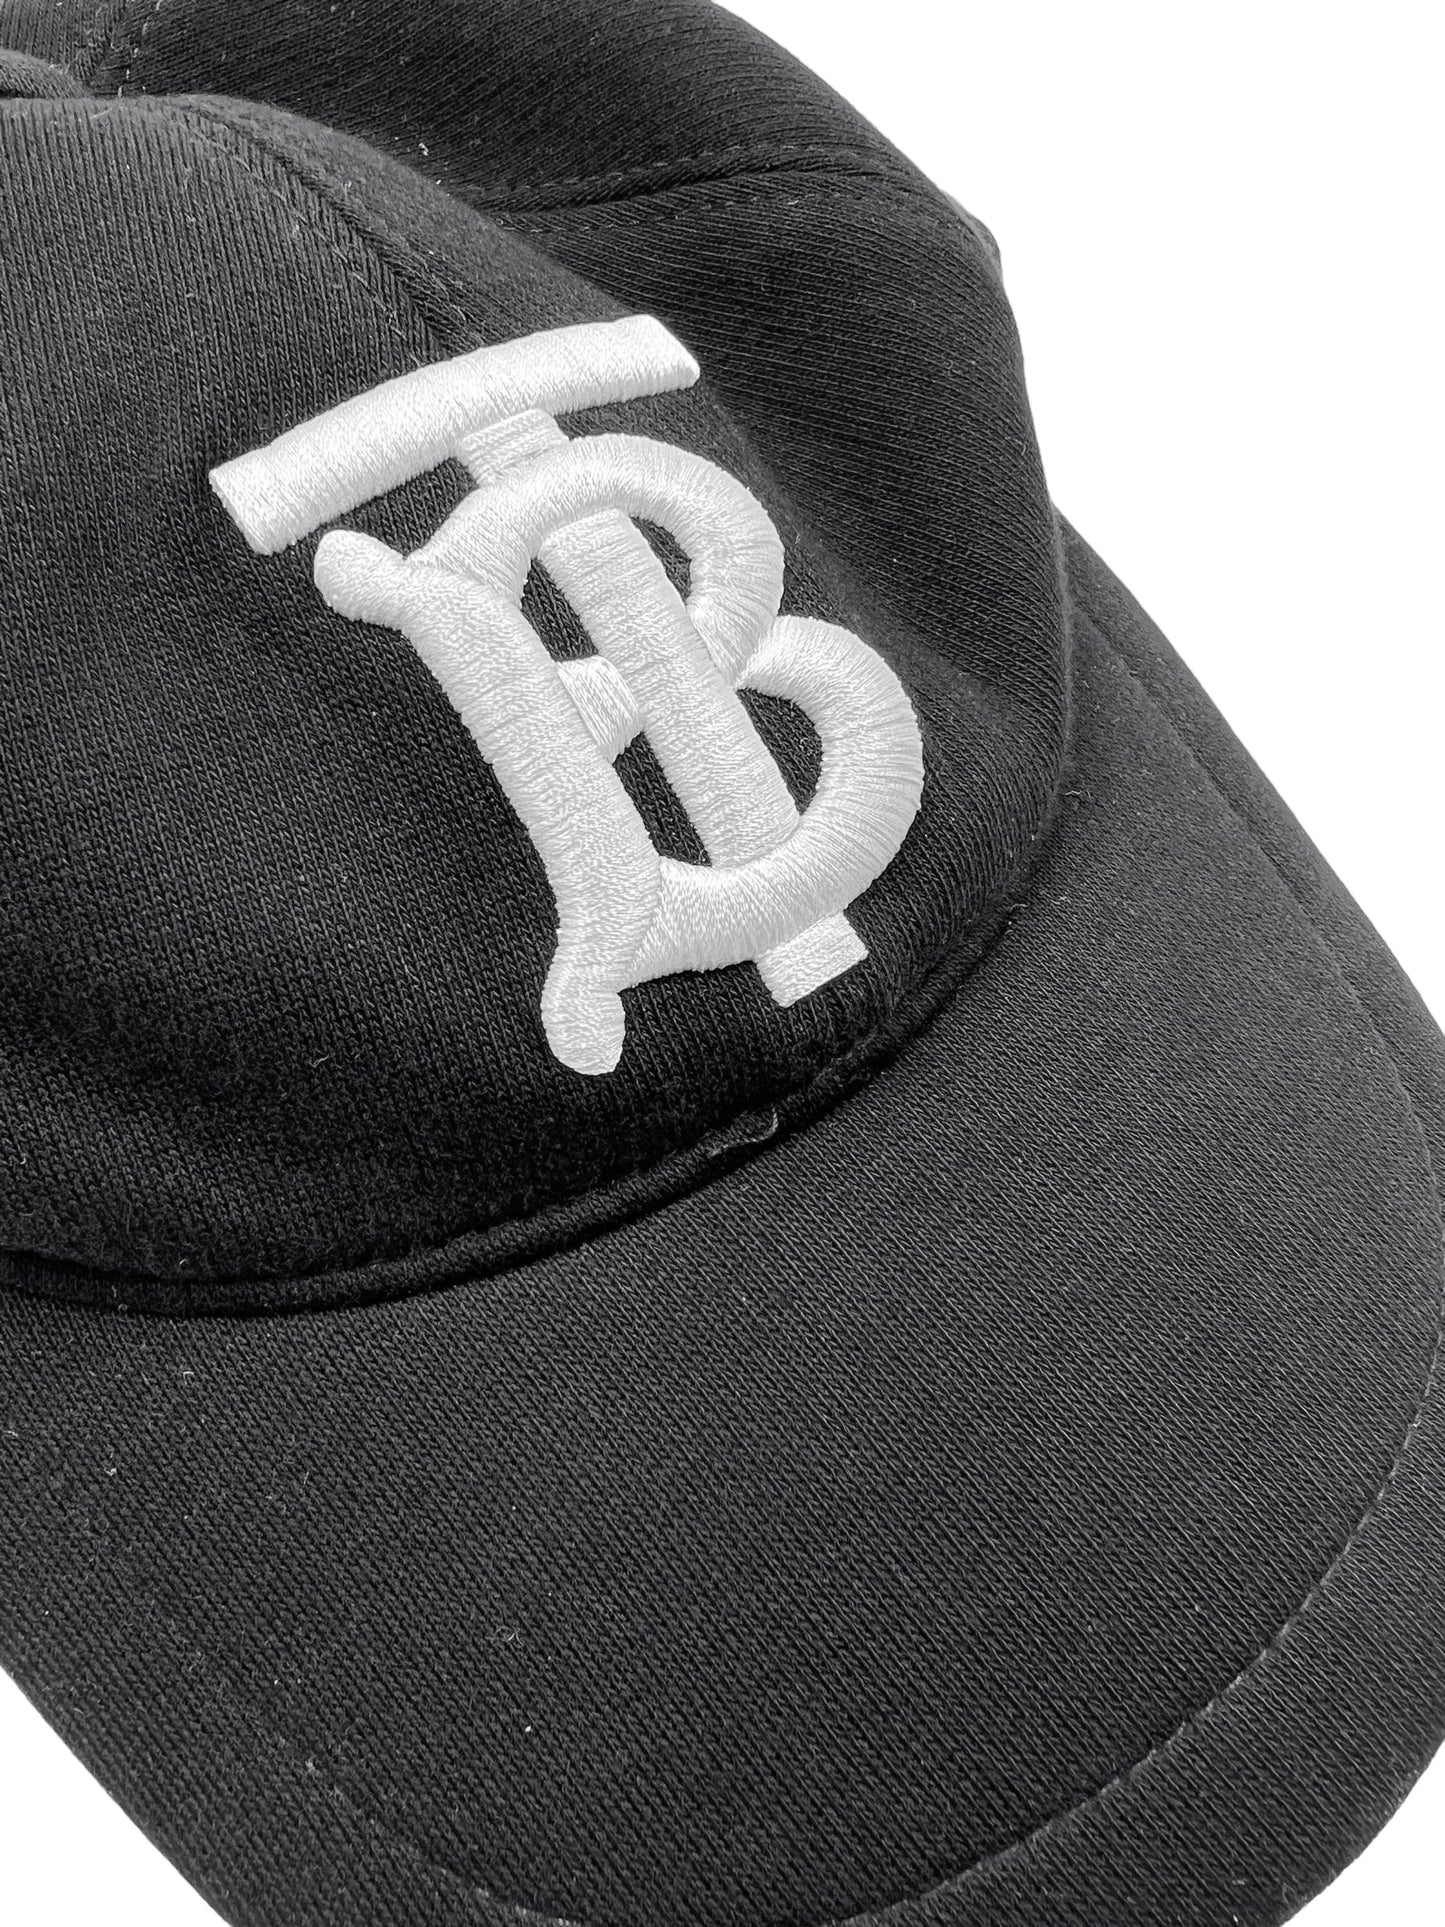 Burberry Size M Black Monogram Motif Cotton Twill Baseball Cap